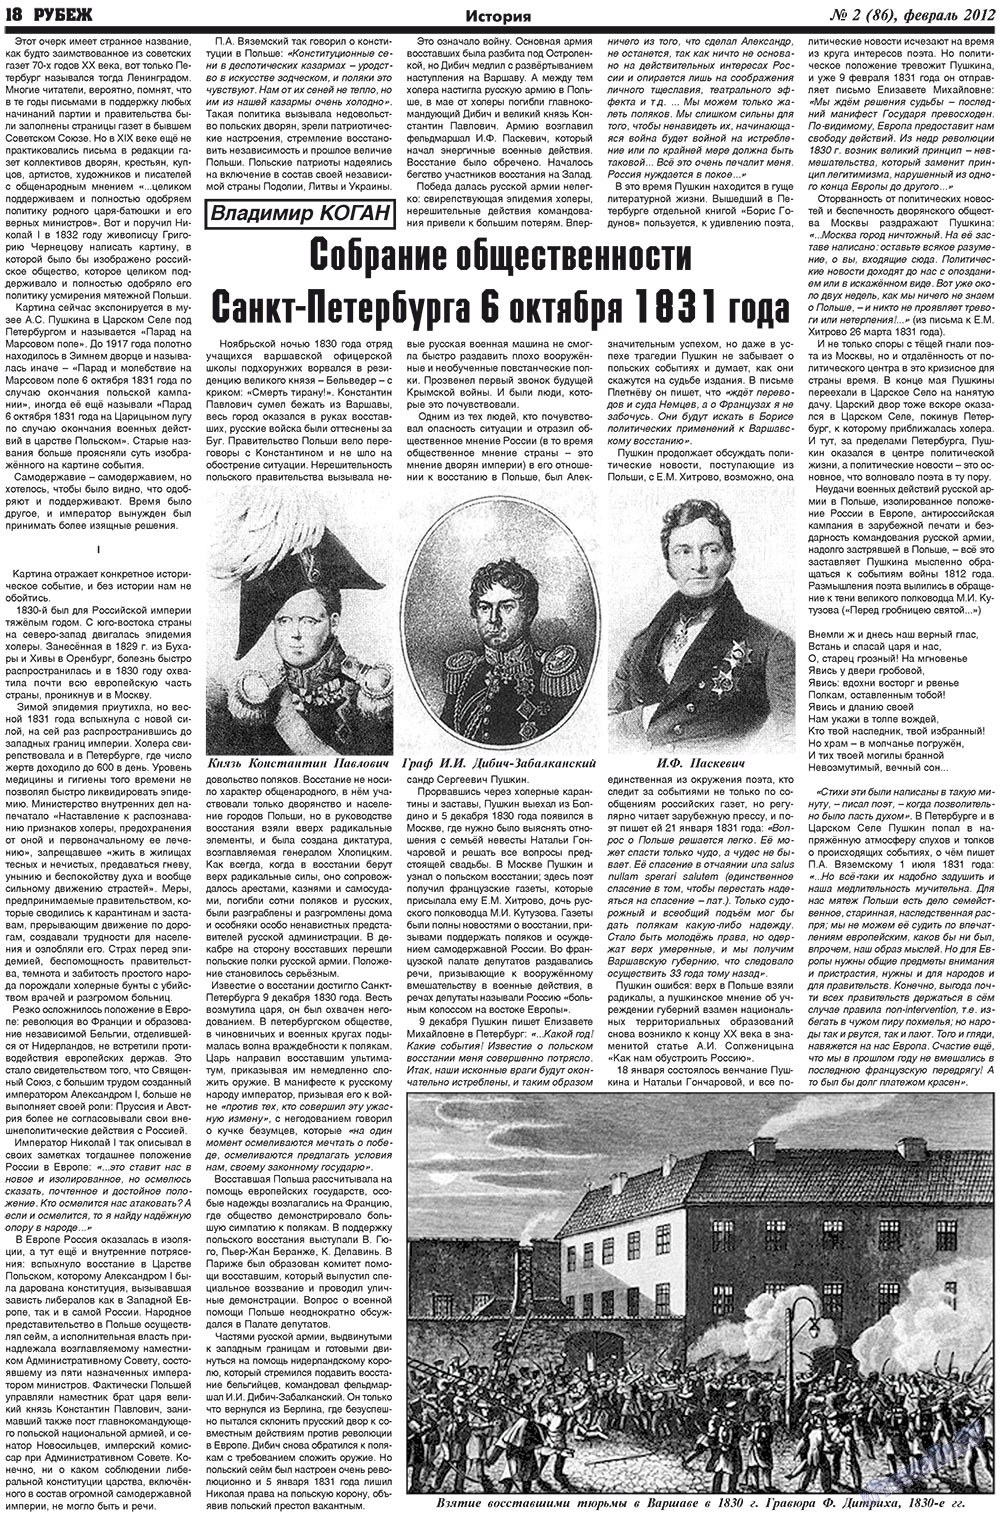 Рубеж, газета. 2012 №2 стр.18